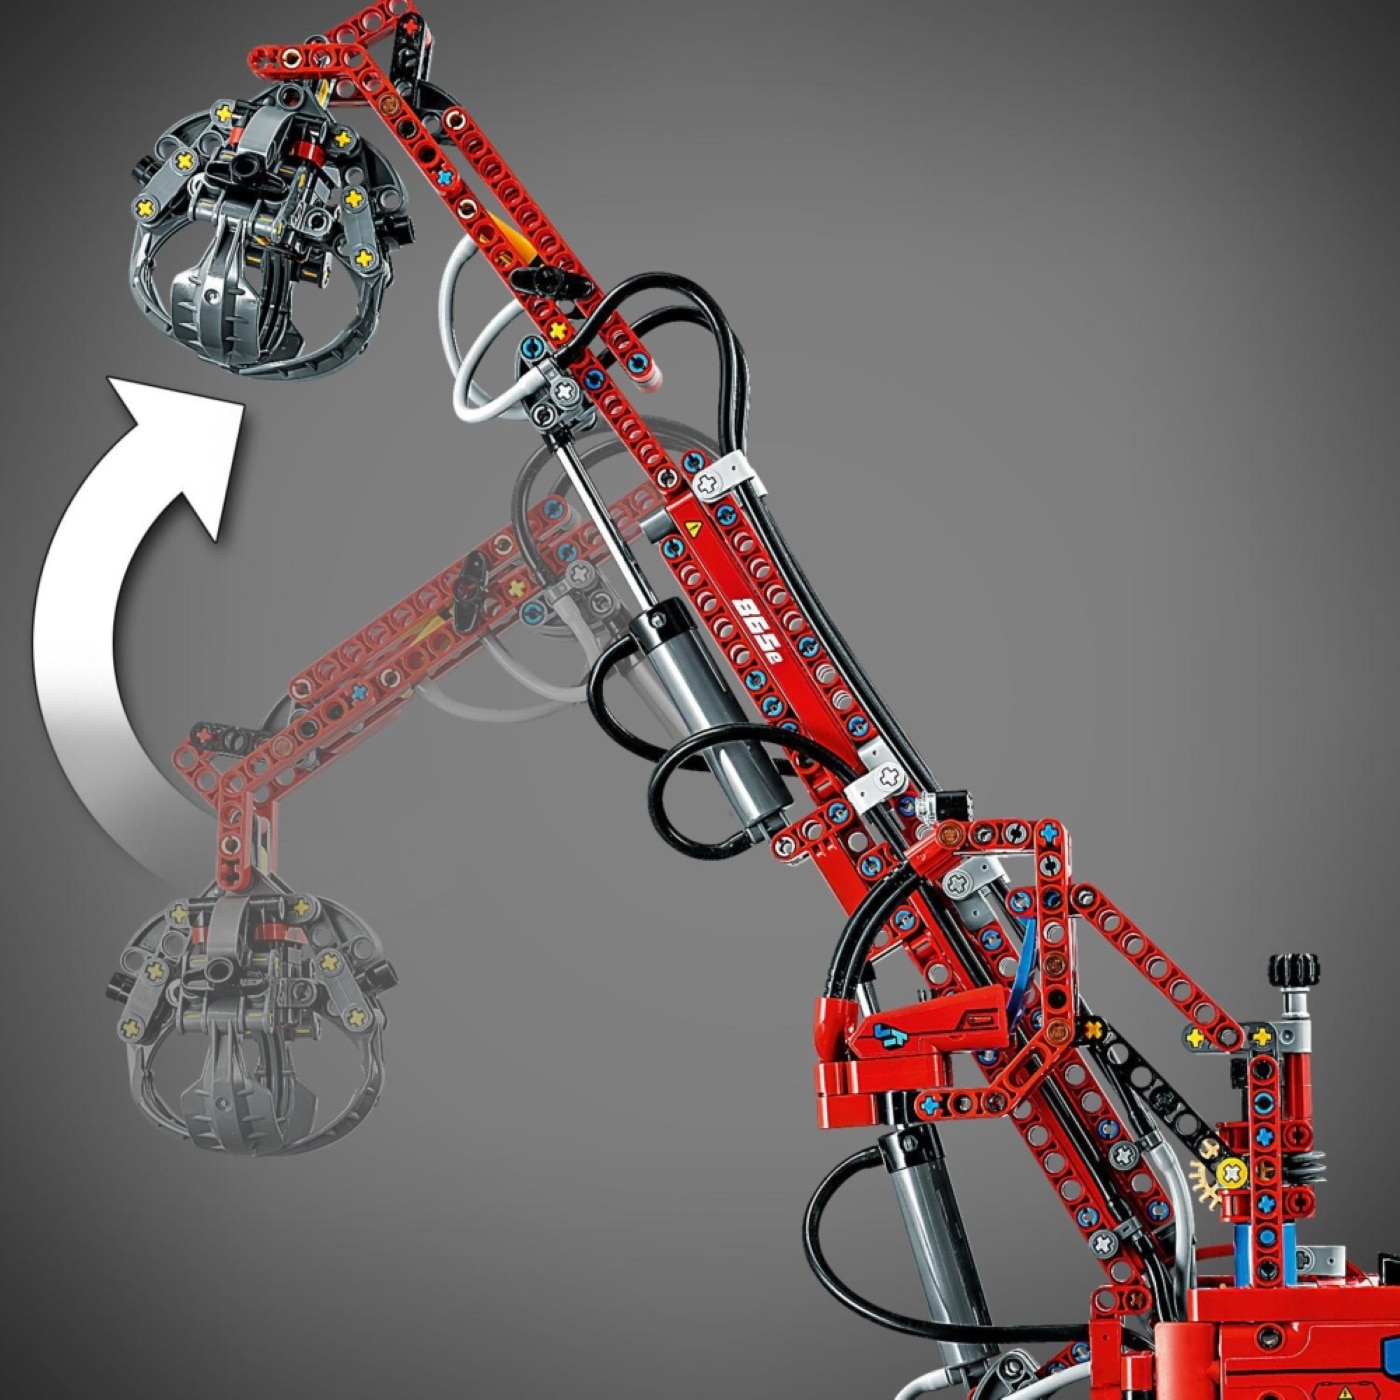 LEGO 科技系列 物料搬運機，在玩家們拼砌過程中，可幫助他們增進操作能力、培養自信，可結合其他正版樂高盒組享受更多樂趣。